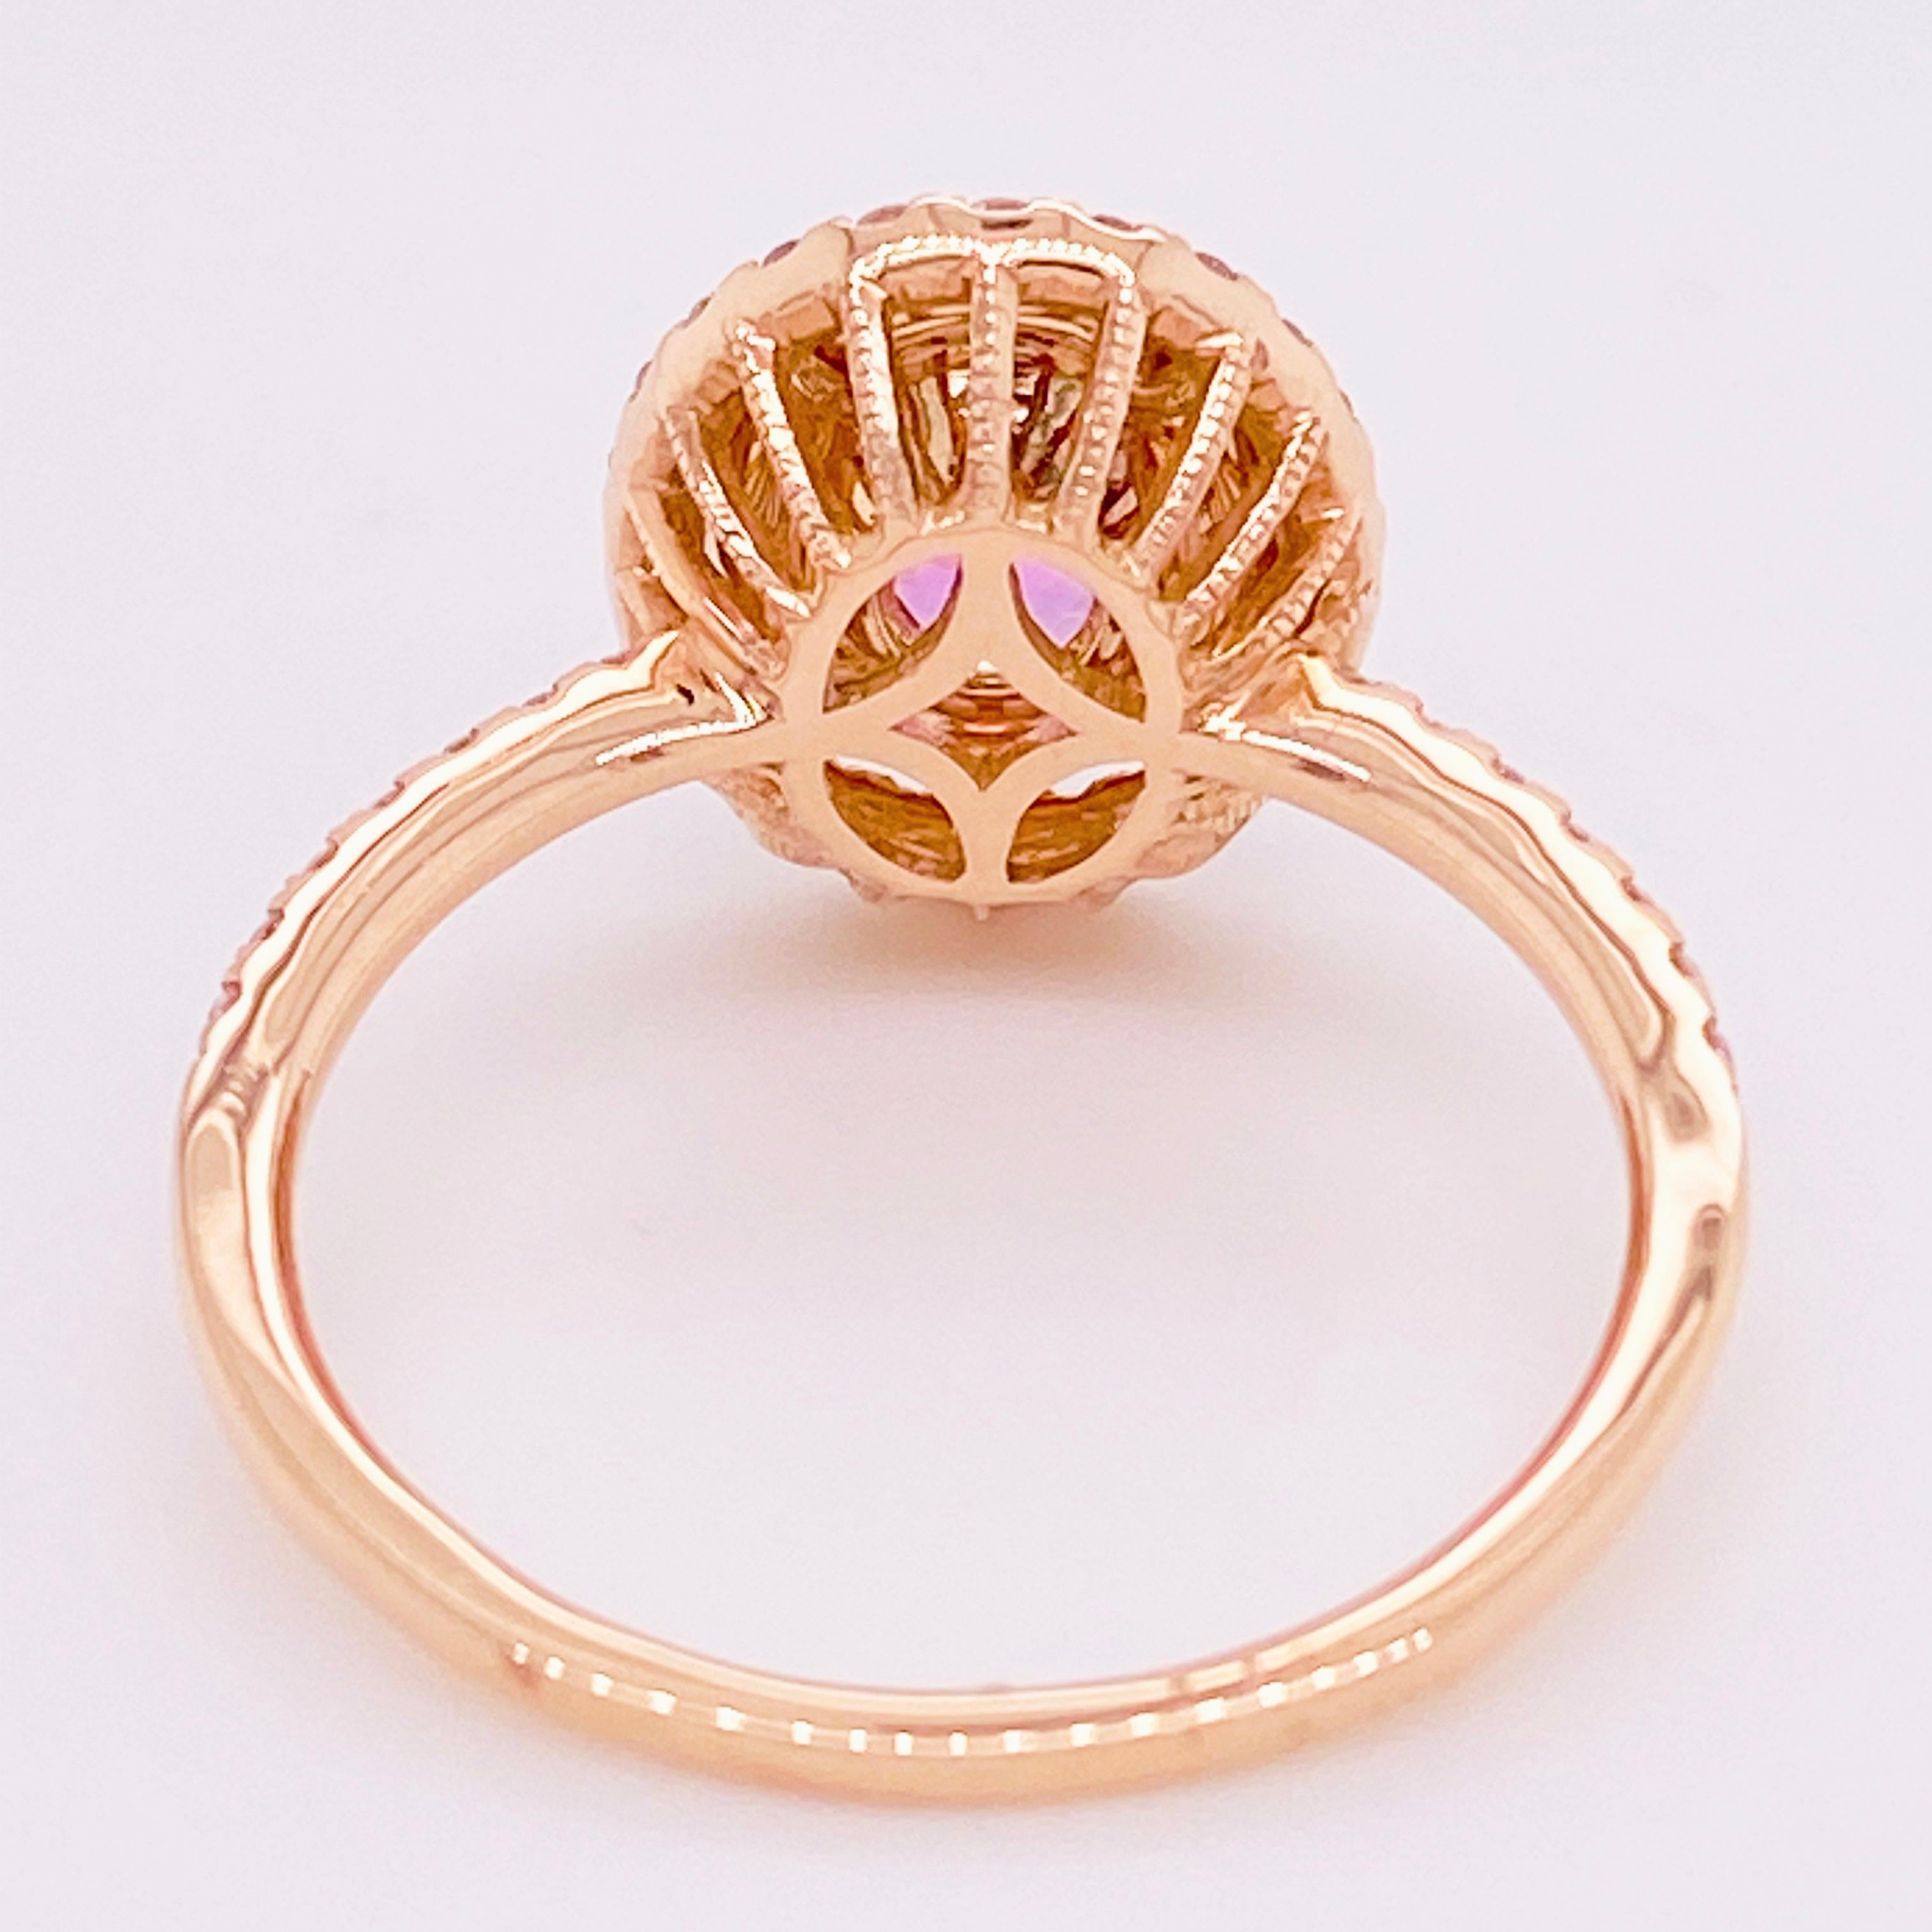 Oval Cut Pink Sapphire Diamond Ring, 14 Karat Rose Gold, Fashion, Halo, 1.22 Carat